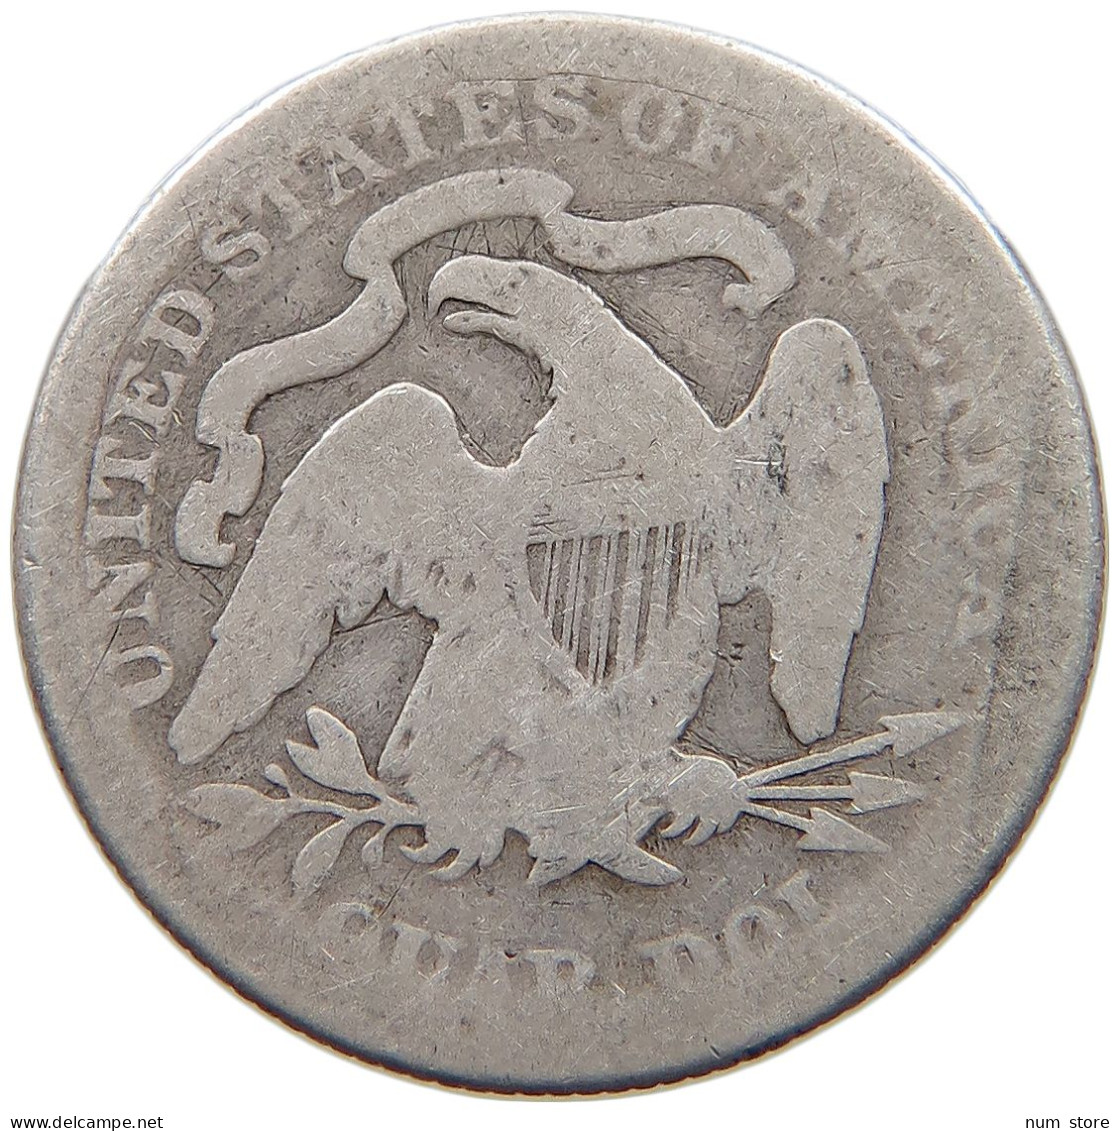 UNITED STATES OF AMERICA QUARTER 1876 SEATED LIBERTY #c036 0265 - 1838-1891: Seated Liberty (Libertà Seduta)